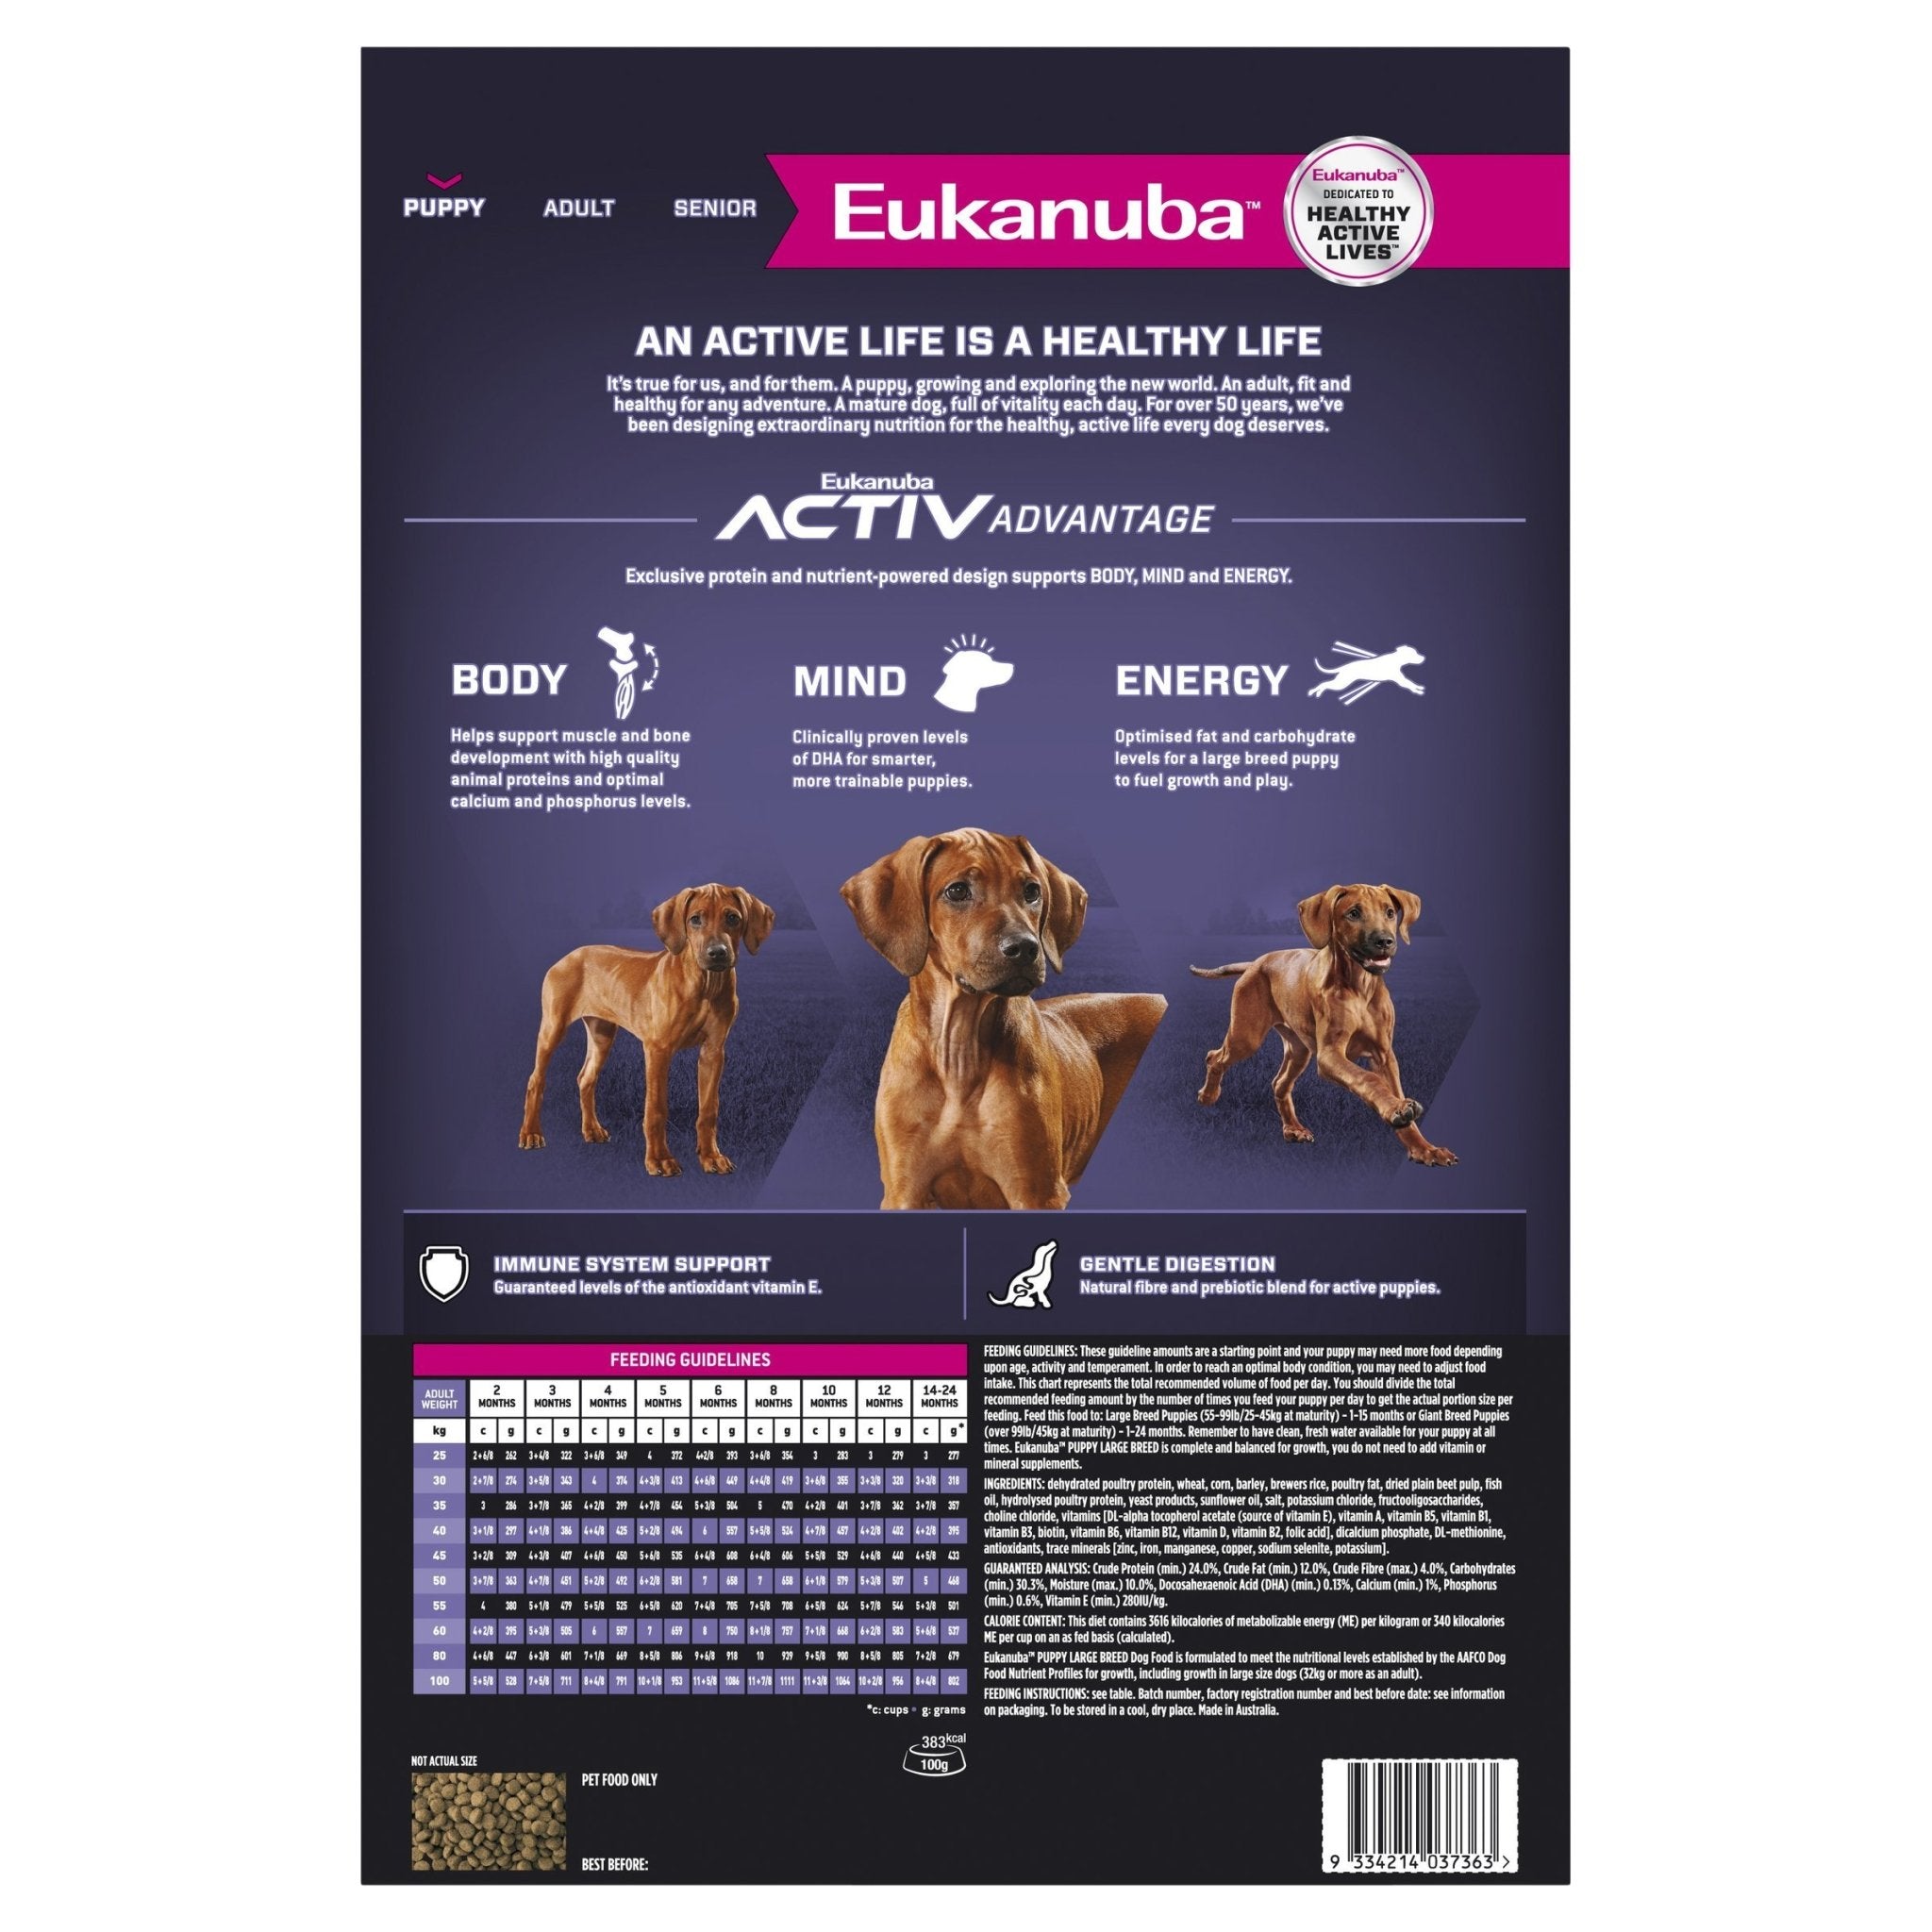 Eukanuba™ Puppy Large Breed Dry Dog Food 15kg